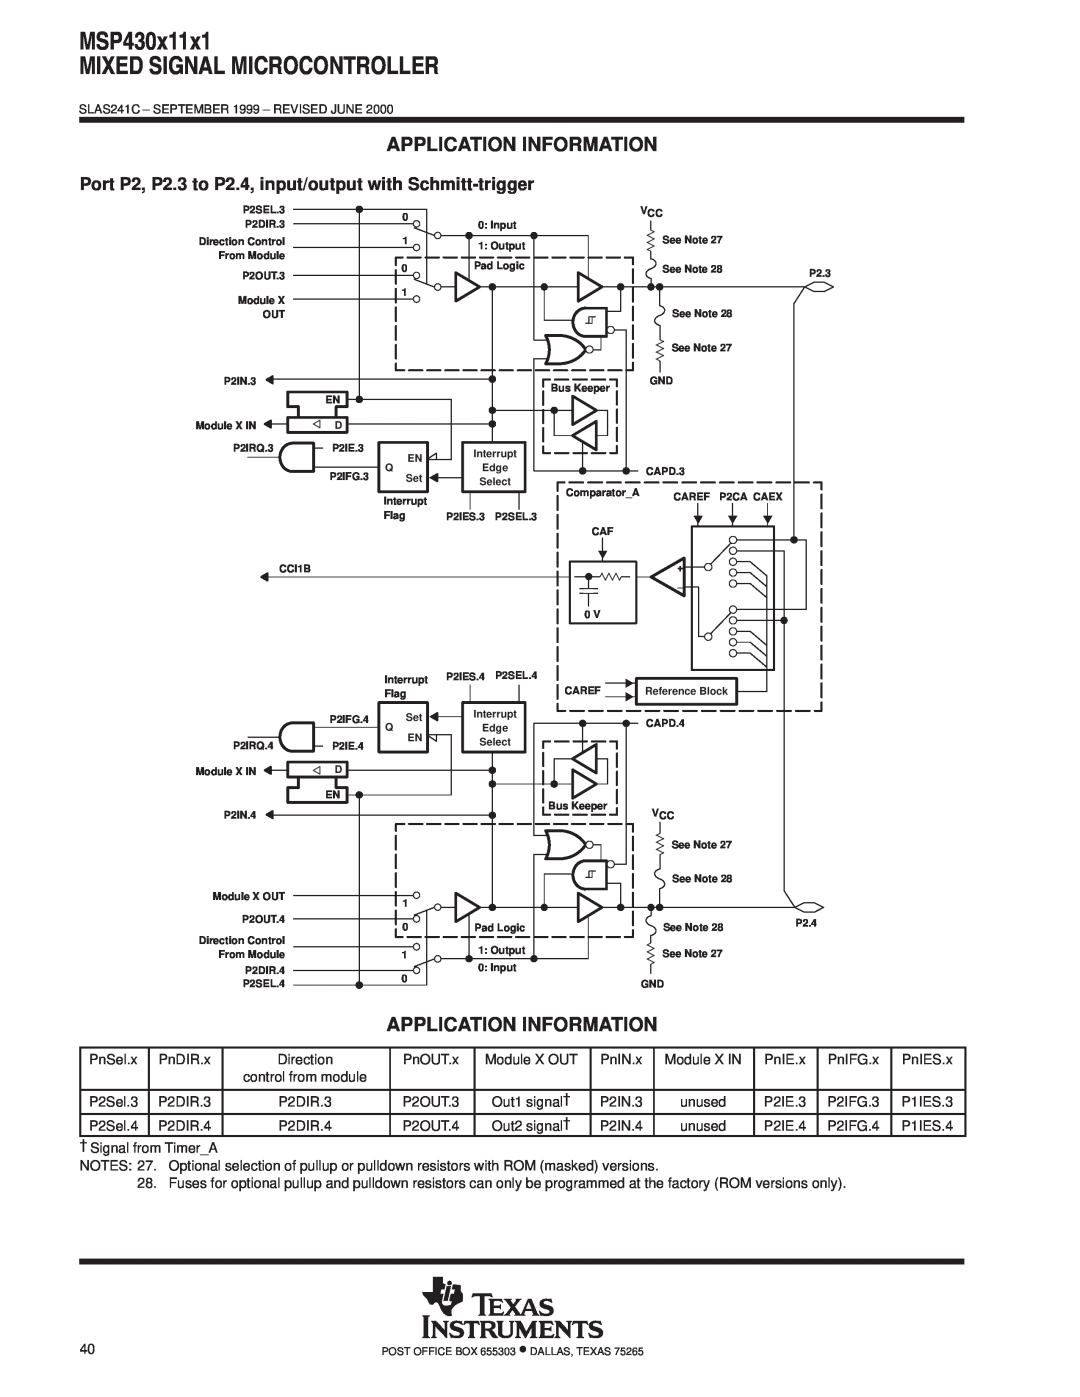 Texas Instruments MSP430x11x1 warranty Port P2, P2.3 to P2.4, input/output with Schmitt-trigger, Application Information 